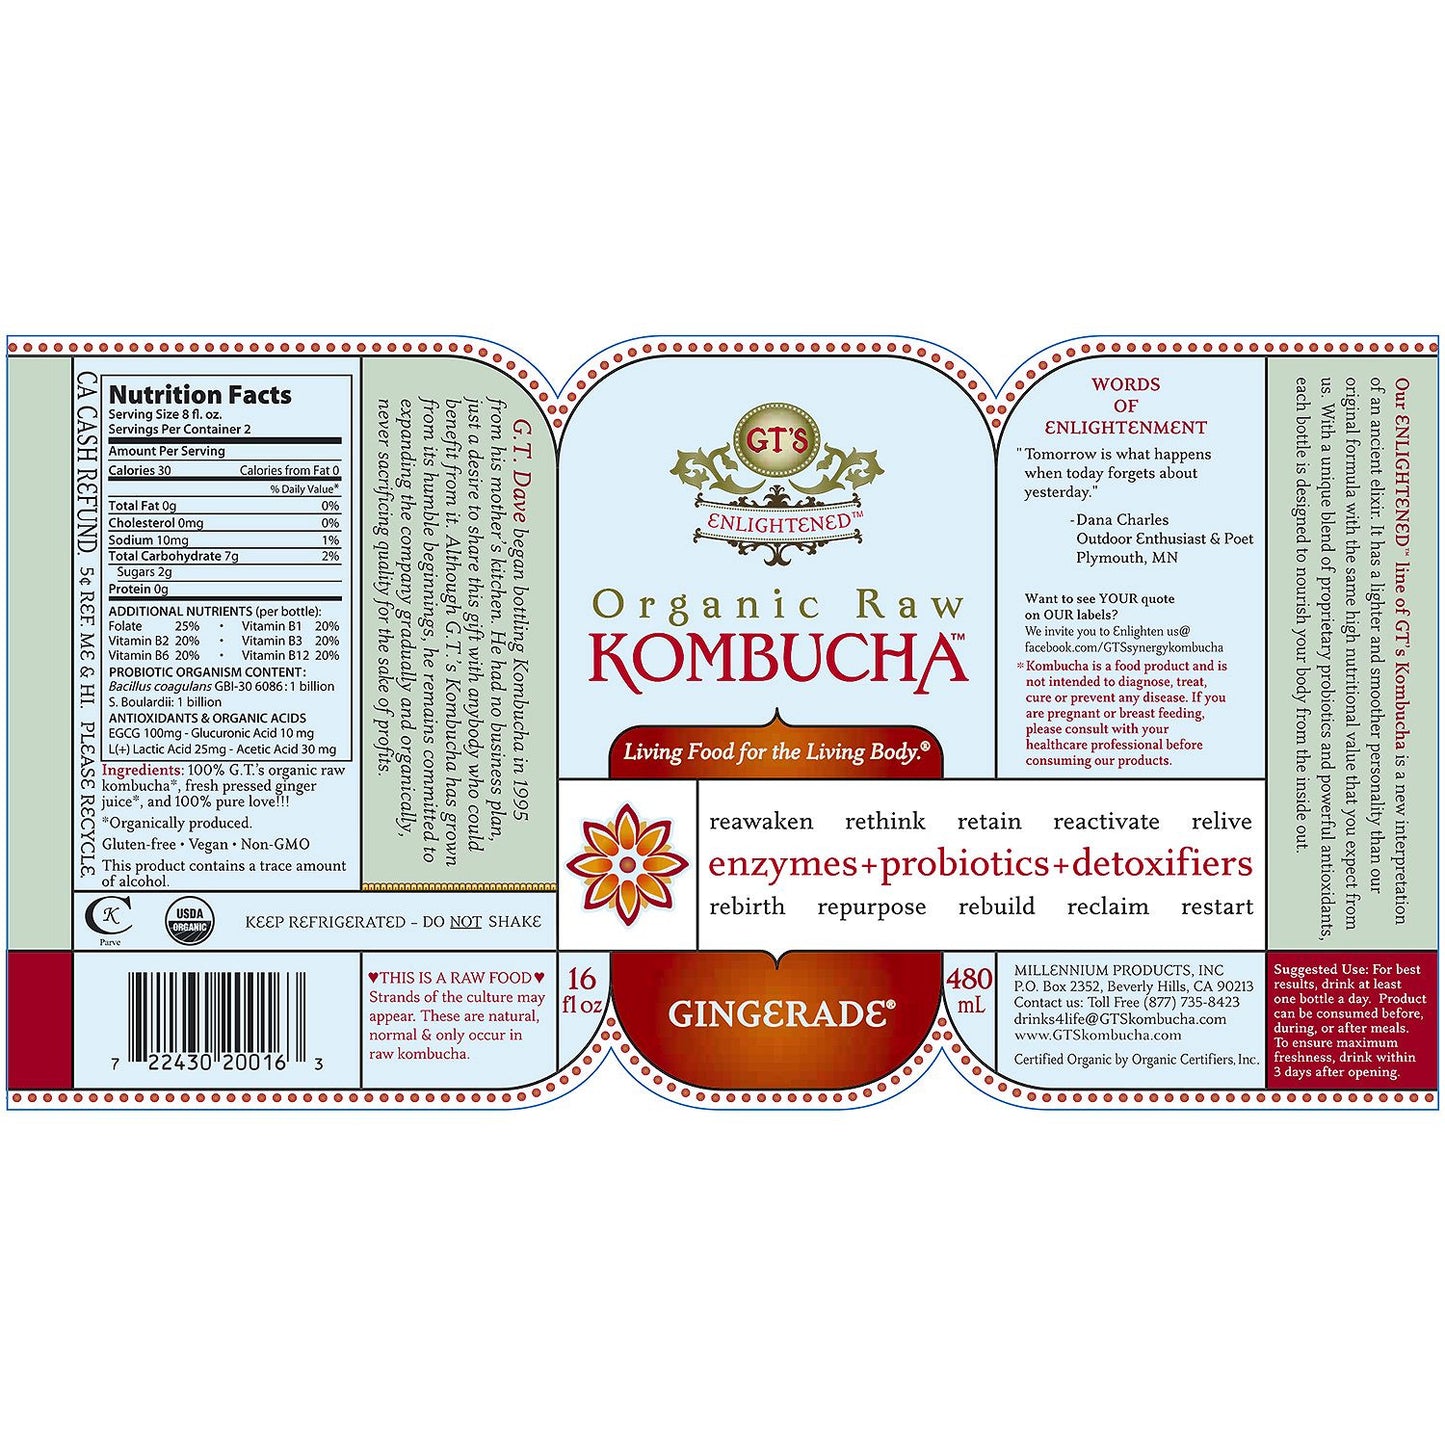 GT'S Organic Raw Kombucha Gingerade (16 oz. bottle, 6 pk.)